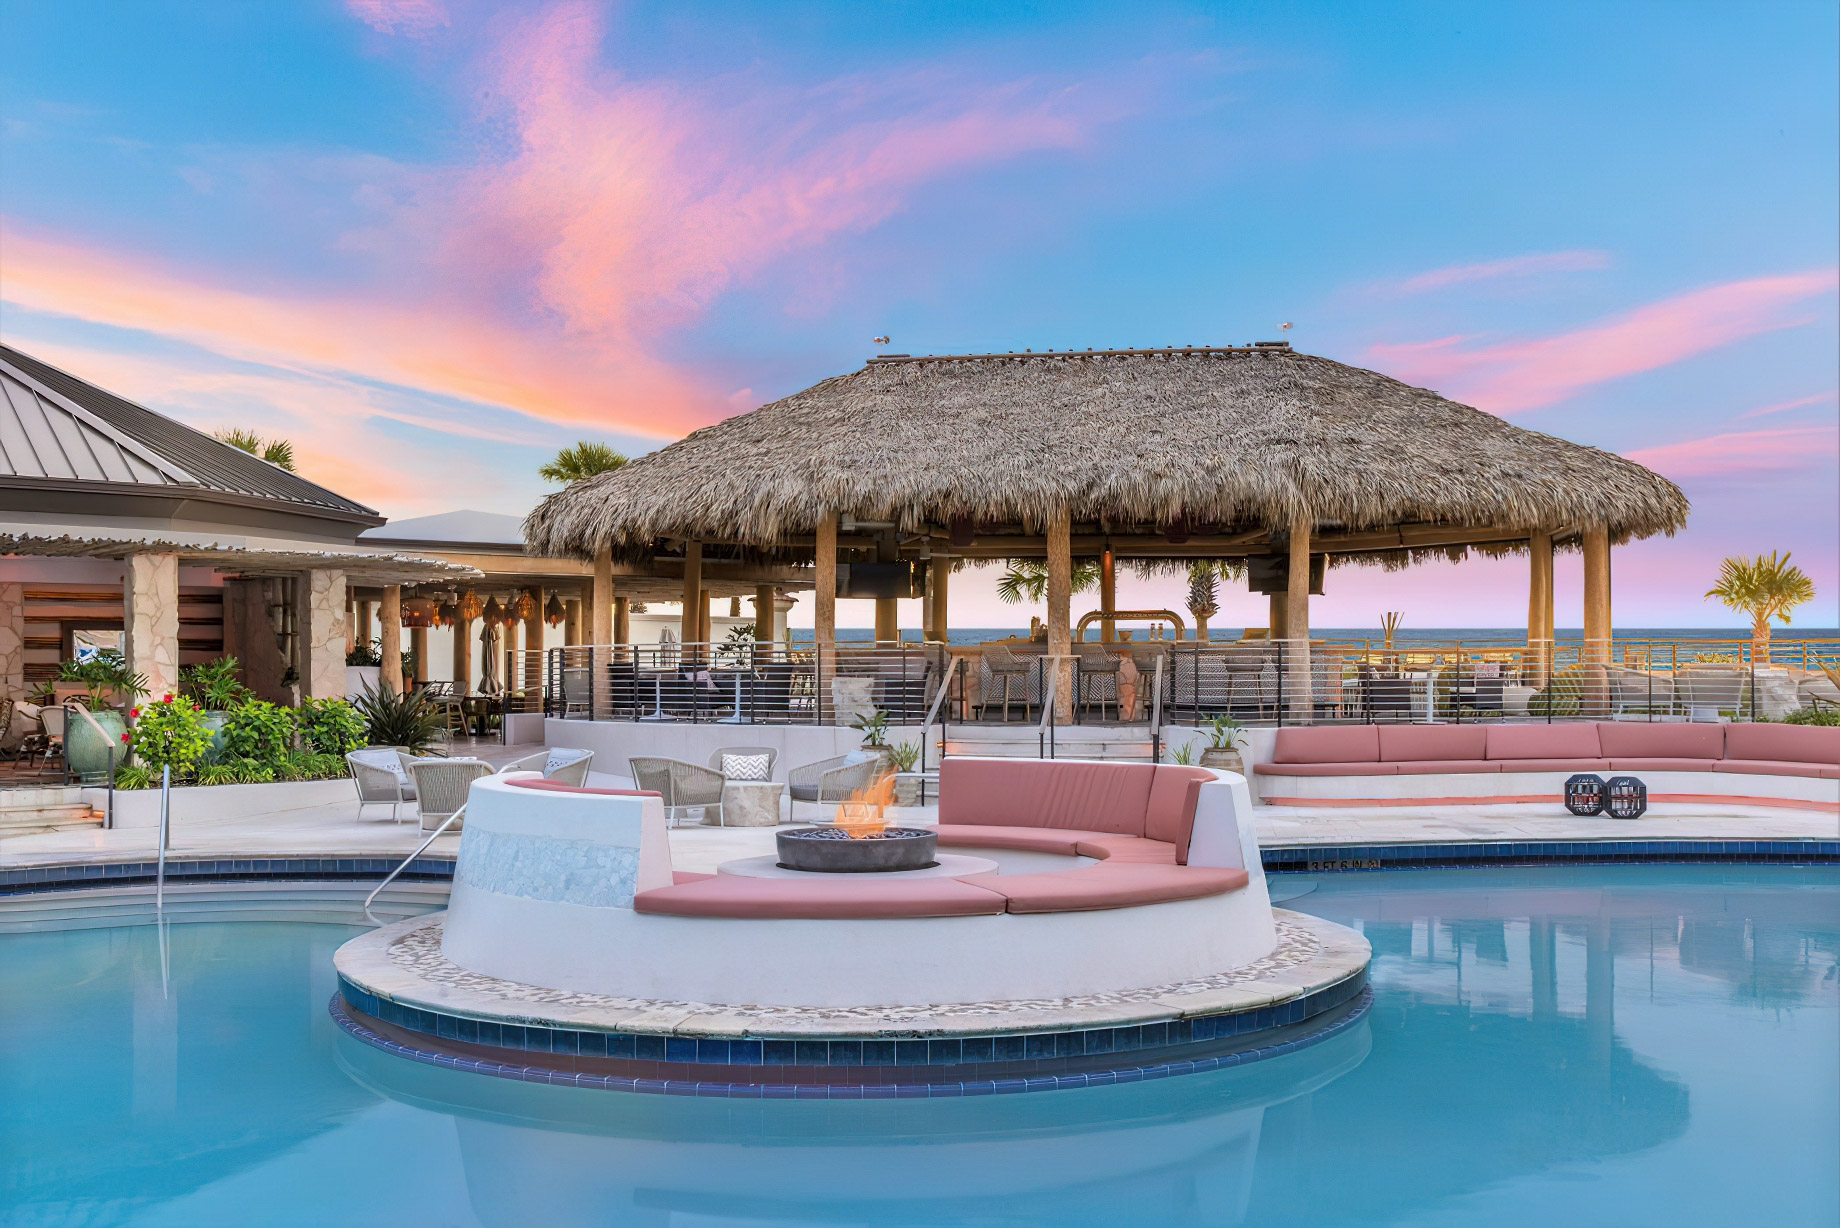 The Ritz-Carlton, Amelia Island Resort - Fernandina Beach, FL, USA - Coquina Restaurant Poolside Sunset